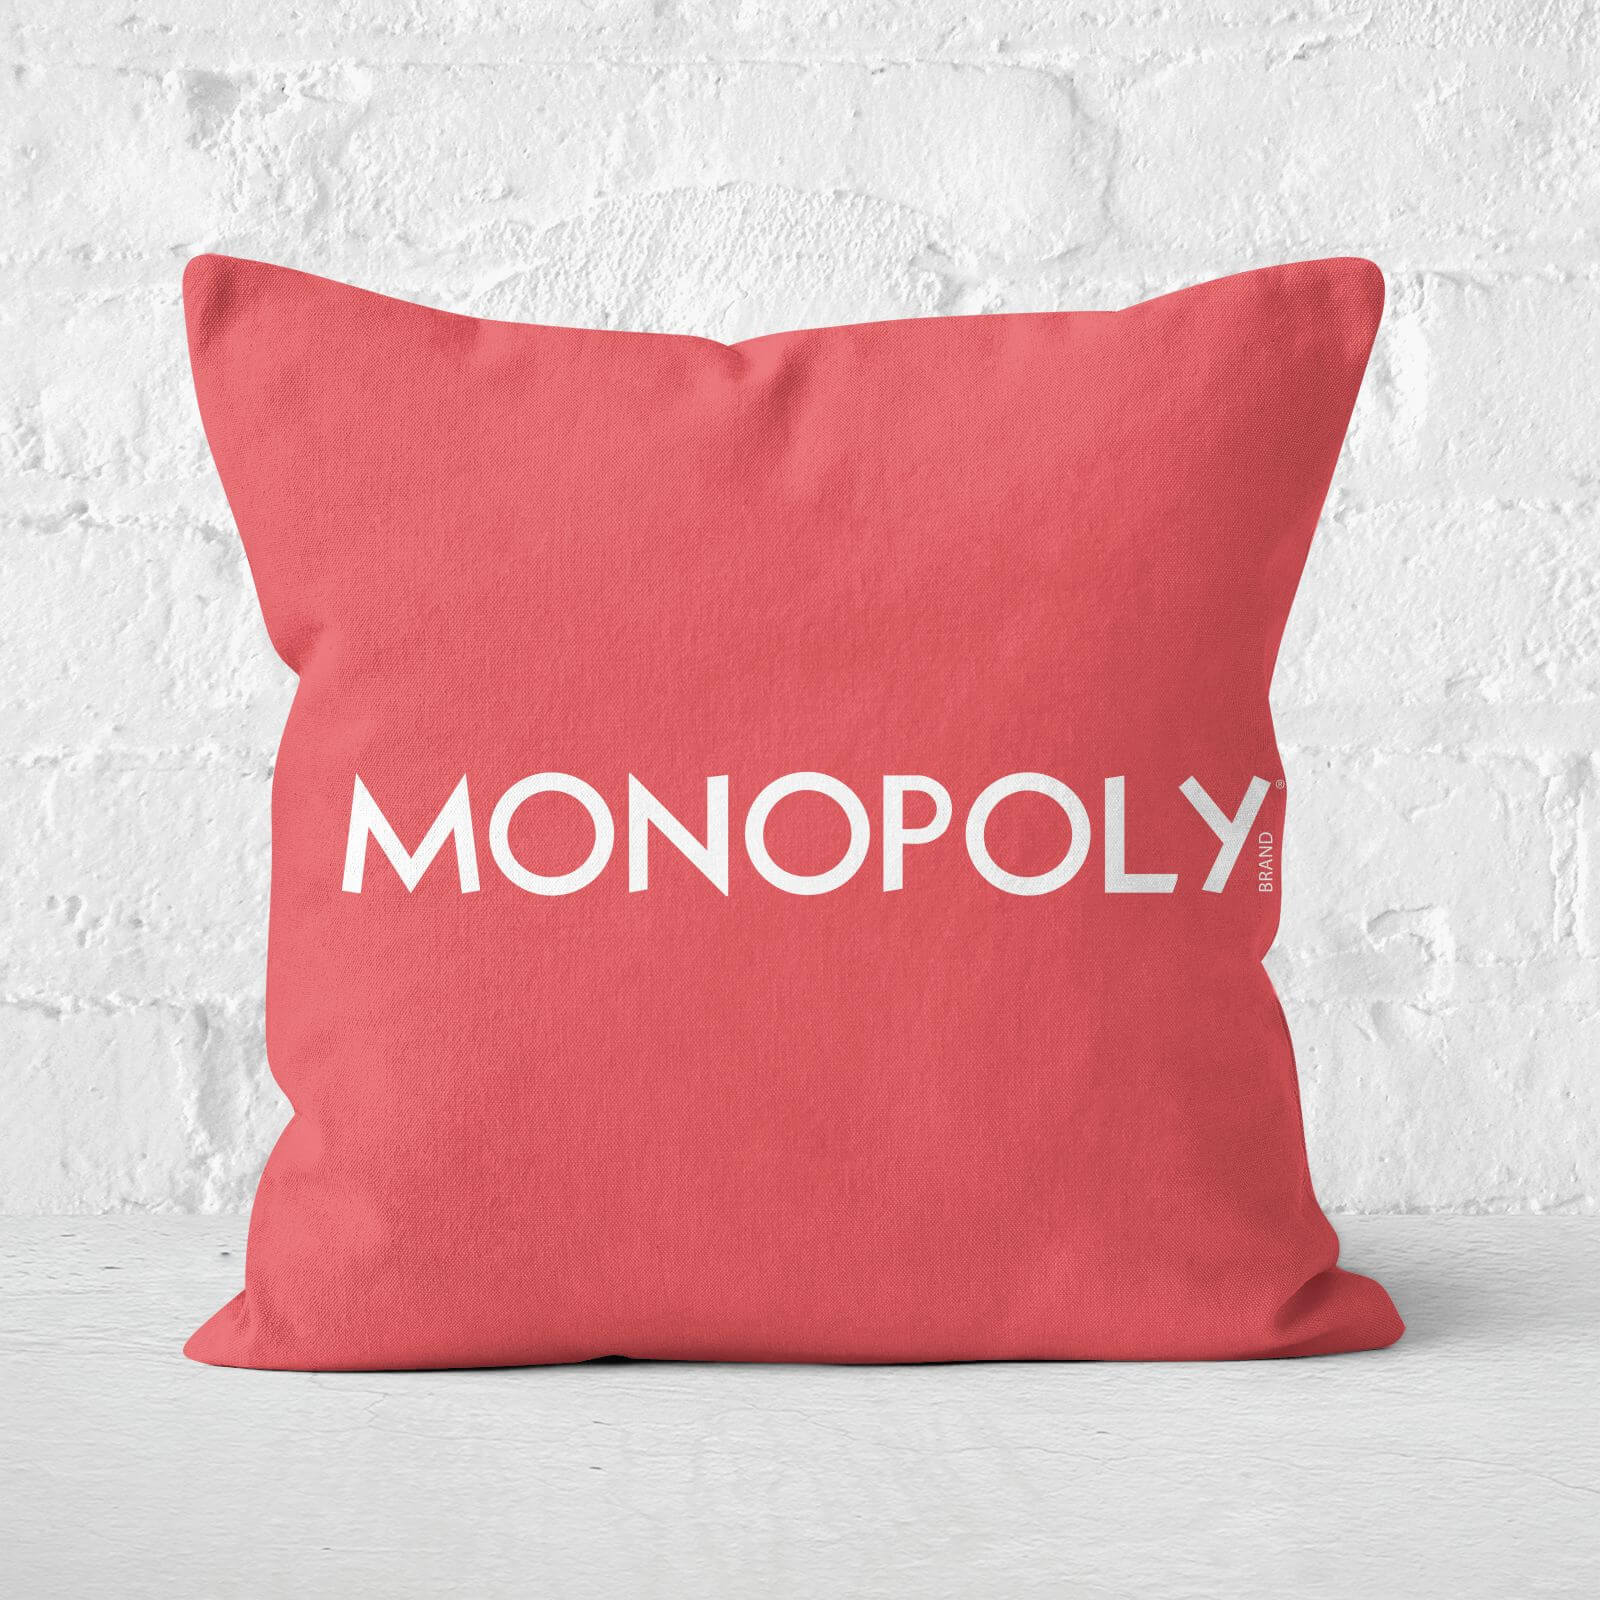 Monopoly Pattern Square Cushion - 40x40cm - Eco Friendly von Decorsome